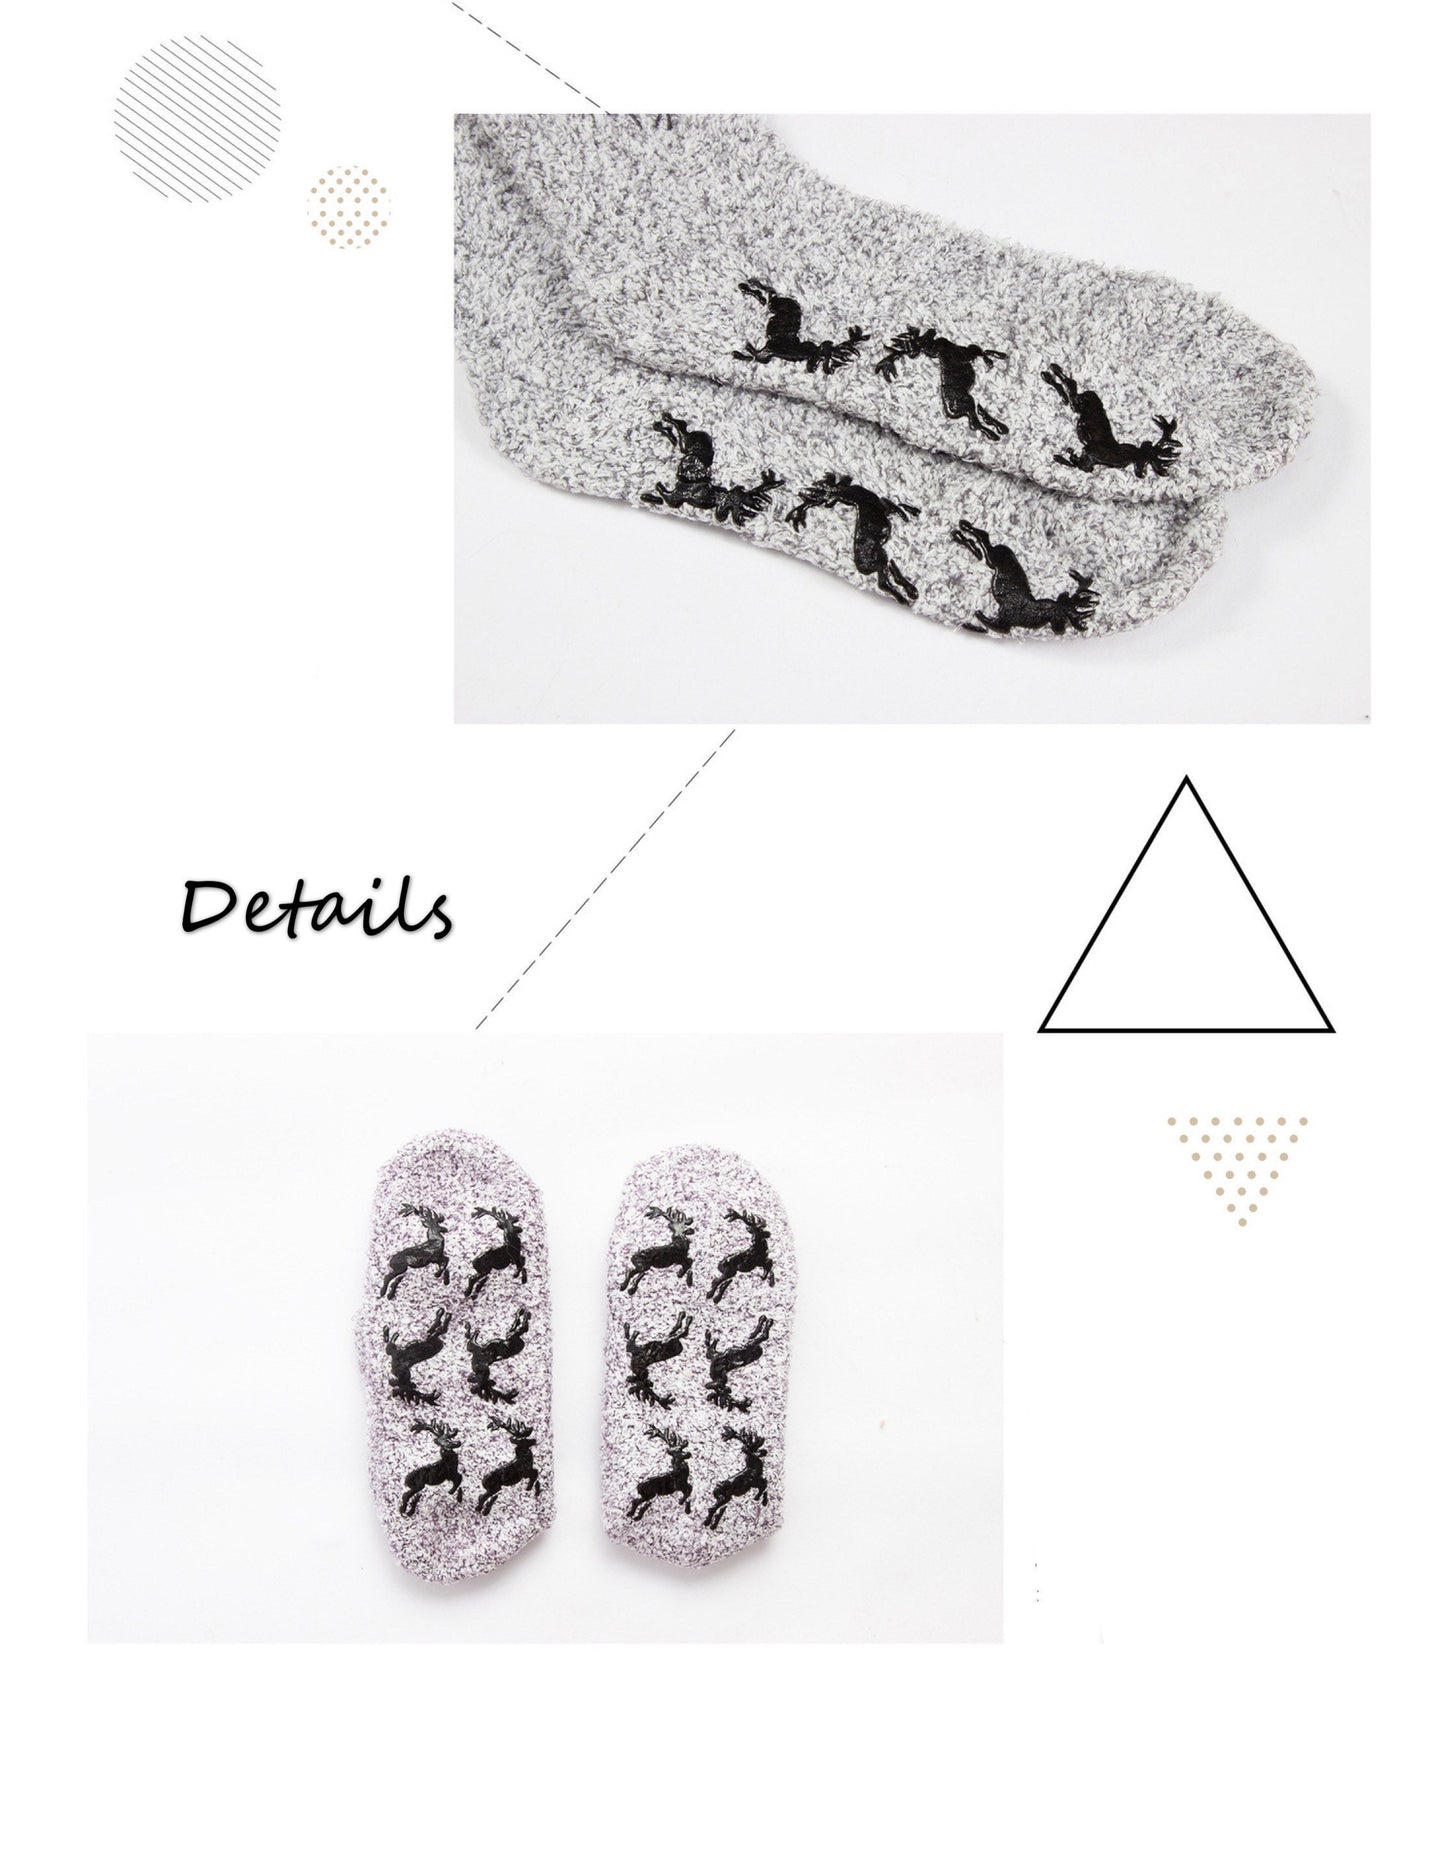 Miss June’s | Women’s | 1 pair | Floor socks | Christmas | Cute | Fuzzy | Home wear | Warm | Soft | Gift Idea | Cozy | Comfort| Winter|Cozy